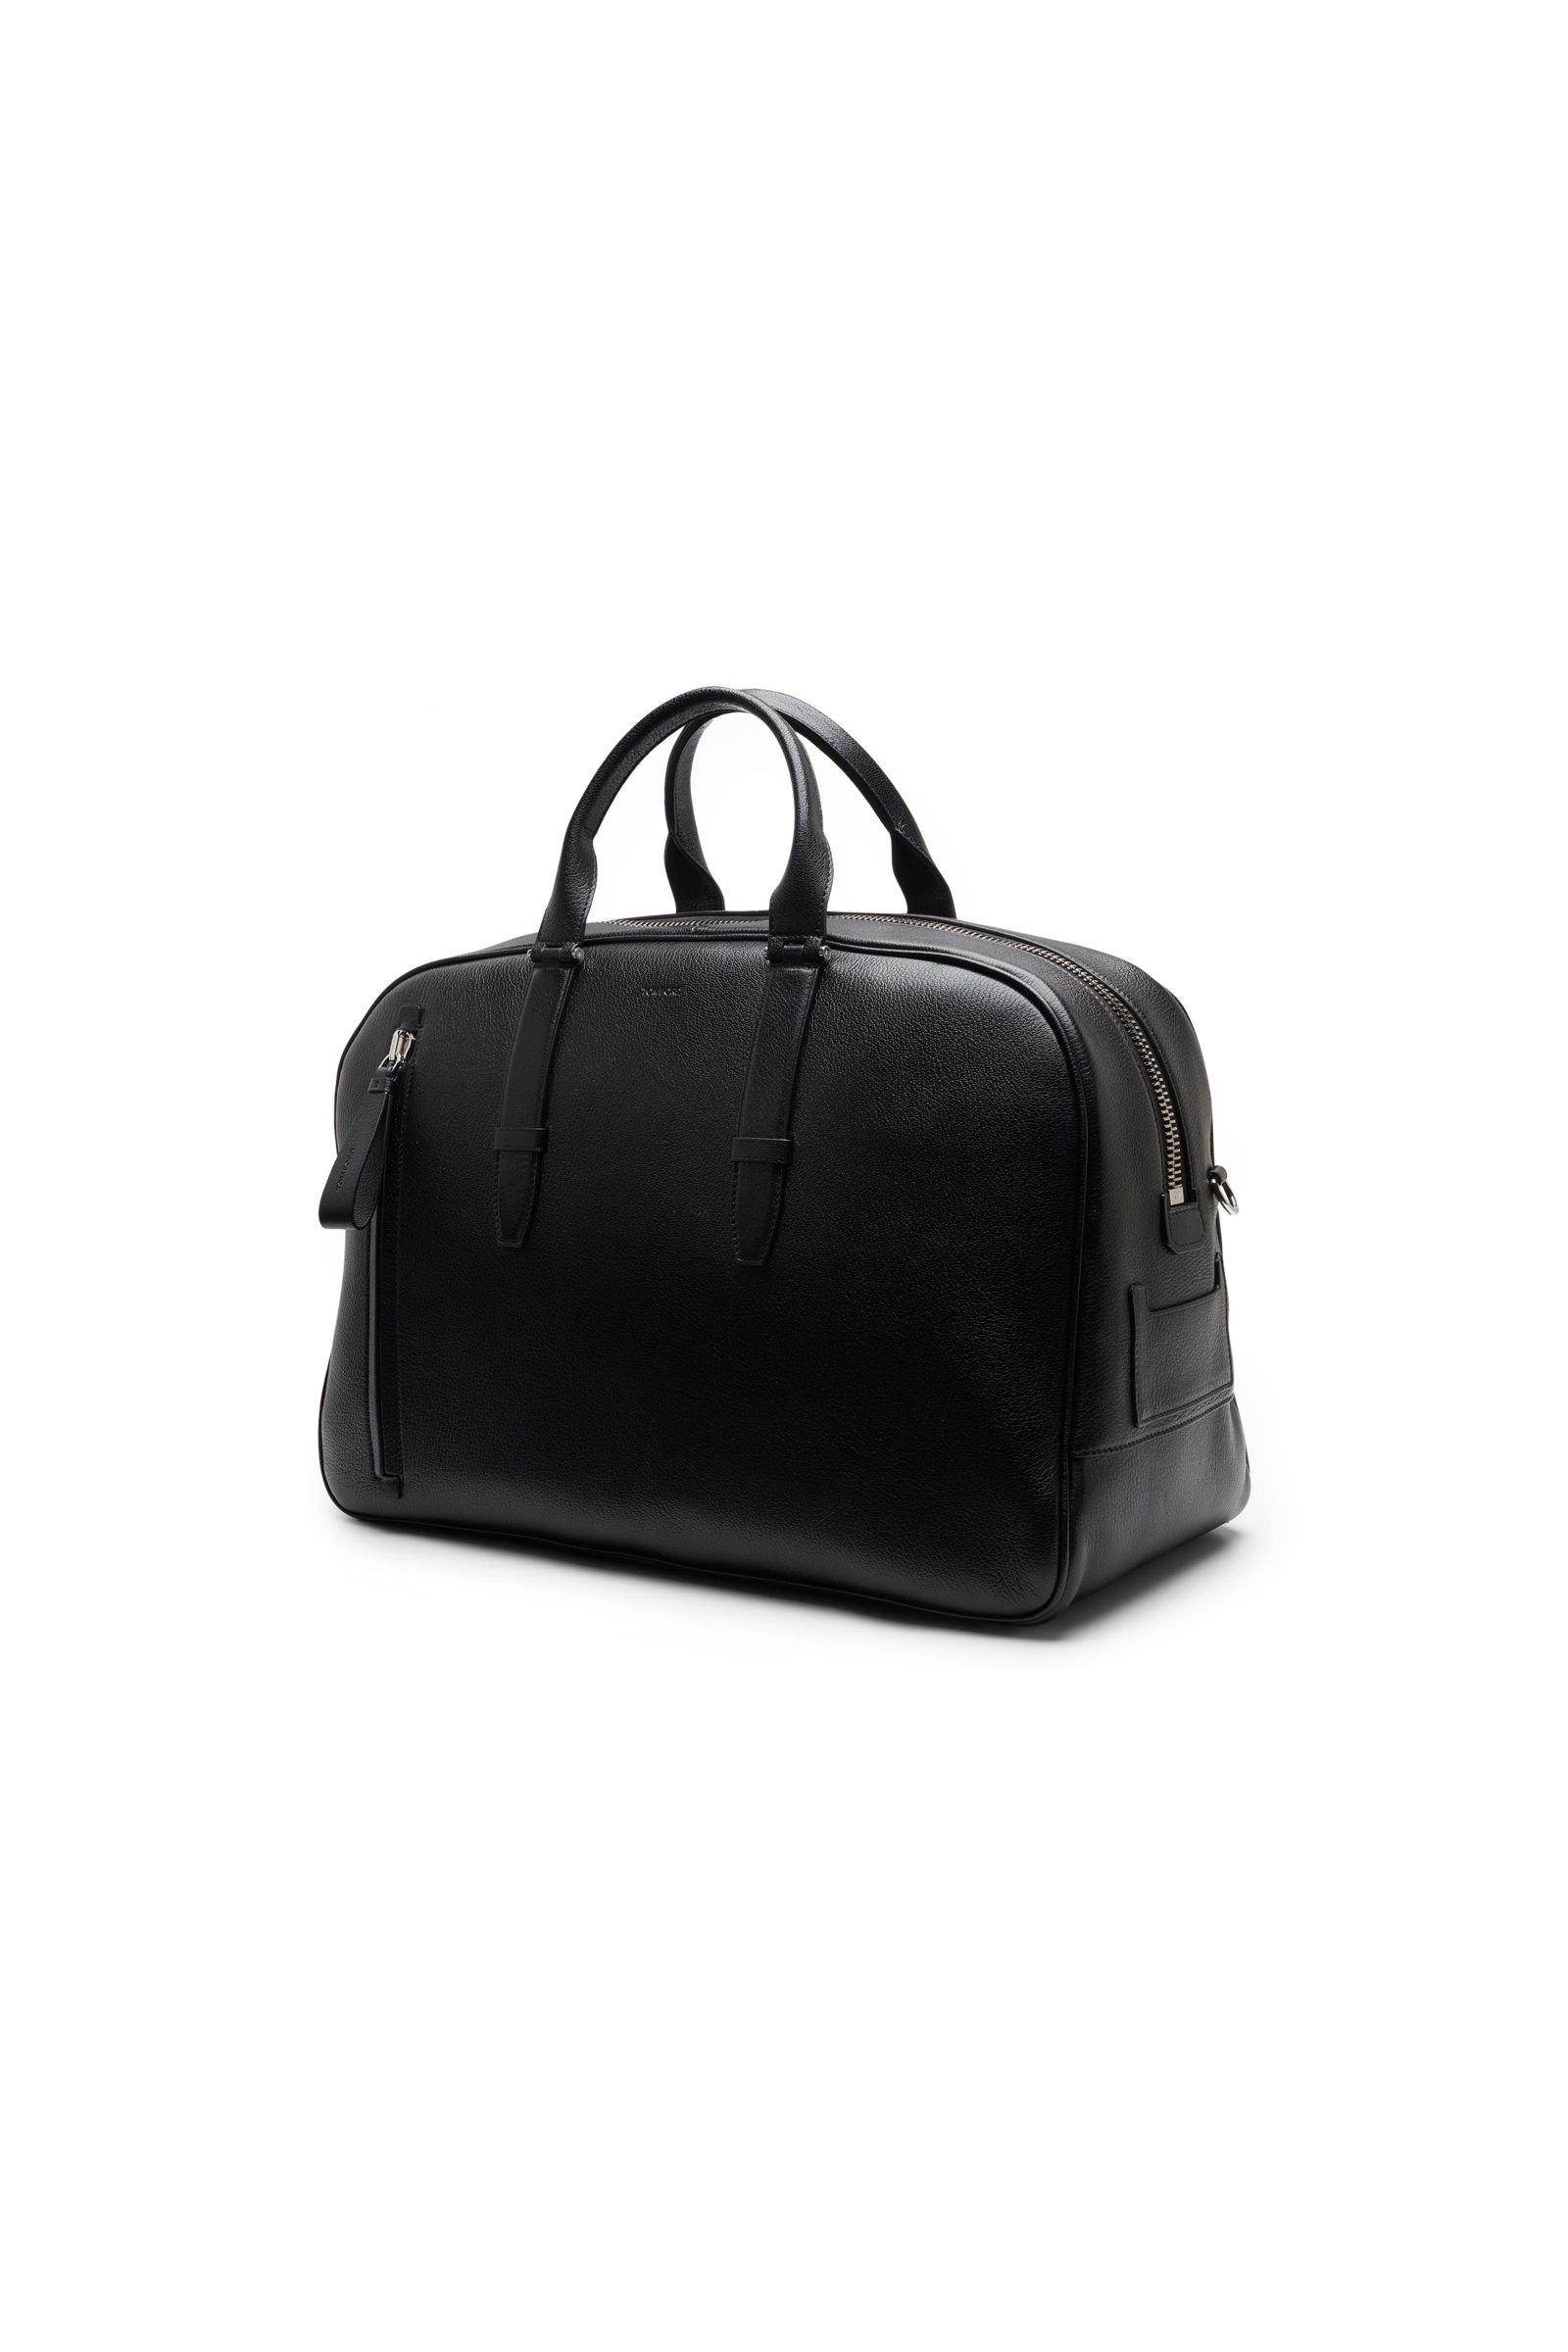 Travel bag black